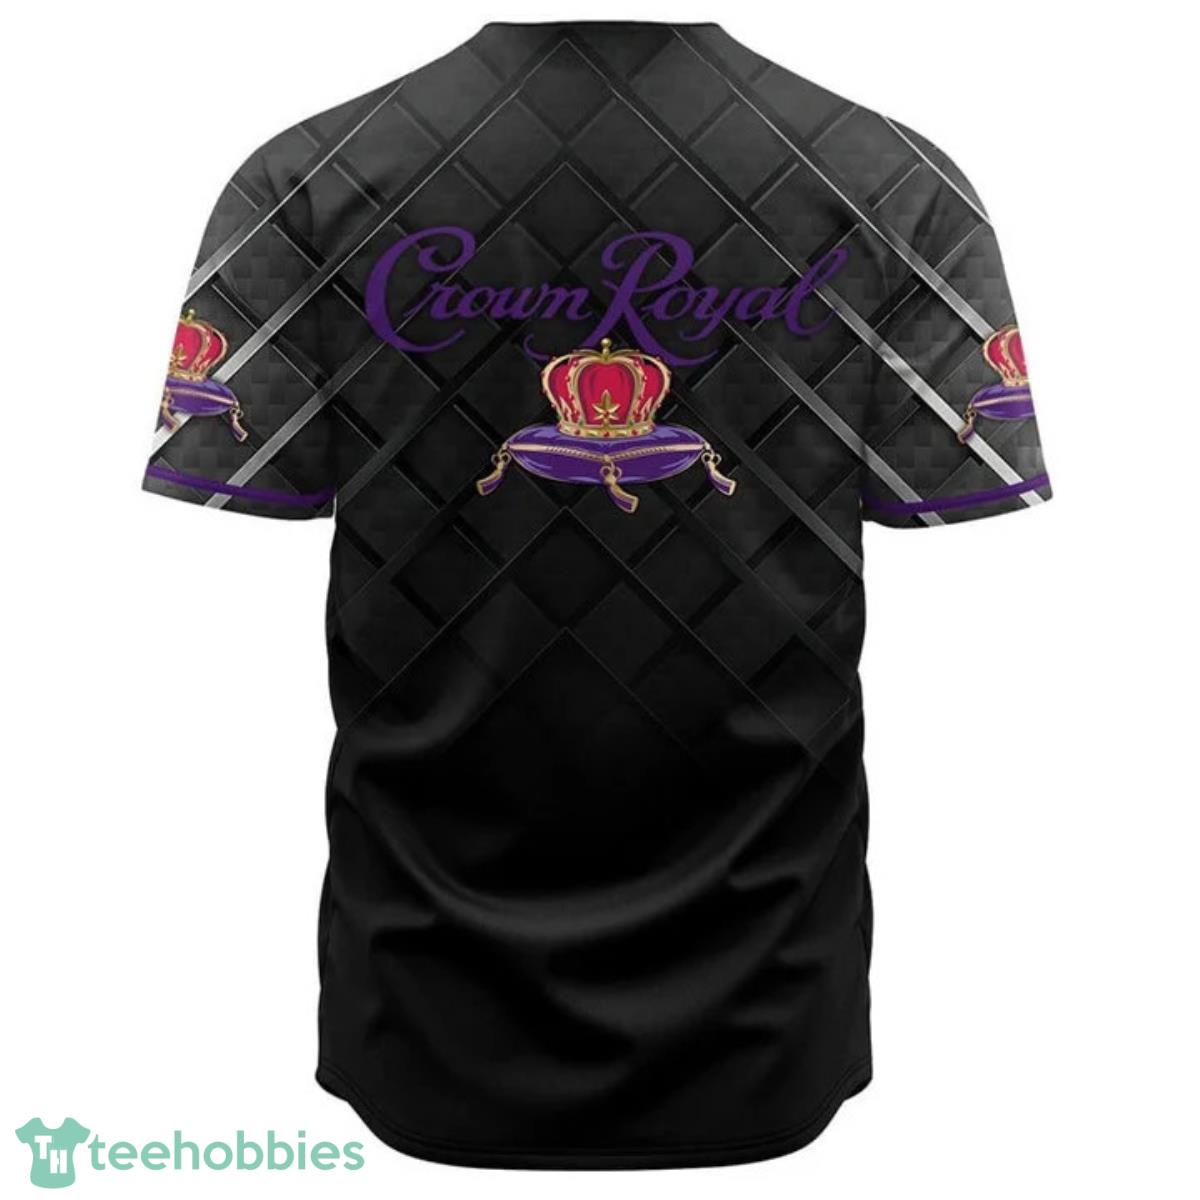 Crown Royal Jersey Shirt Product Photo 2